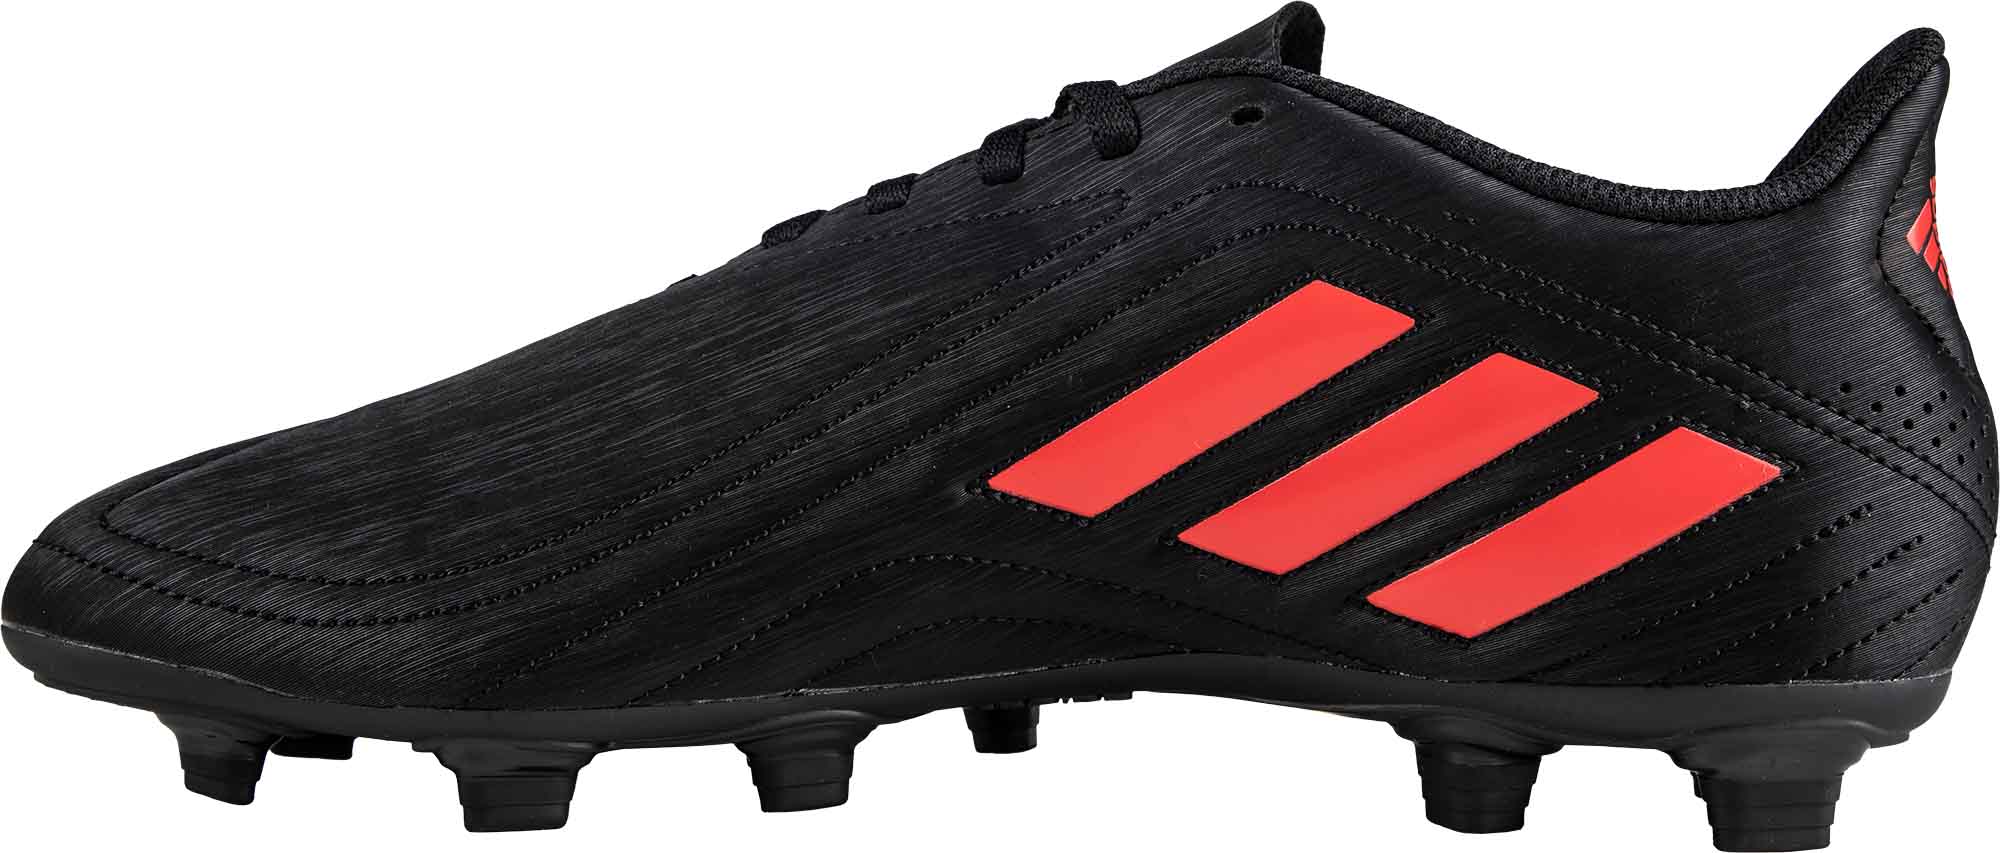 Men's football shoes